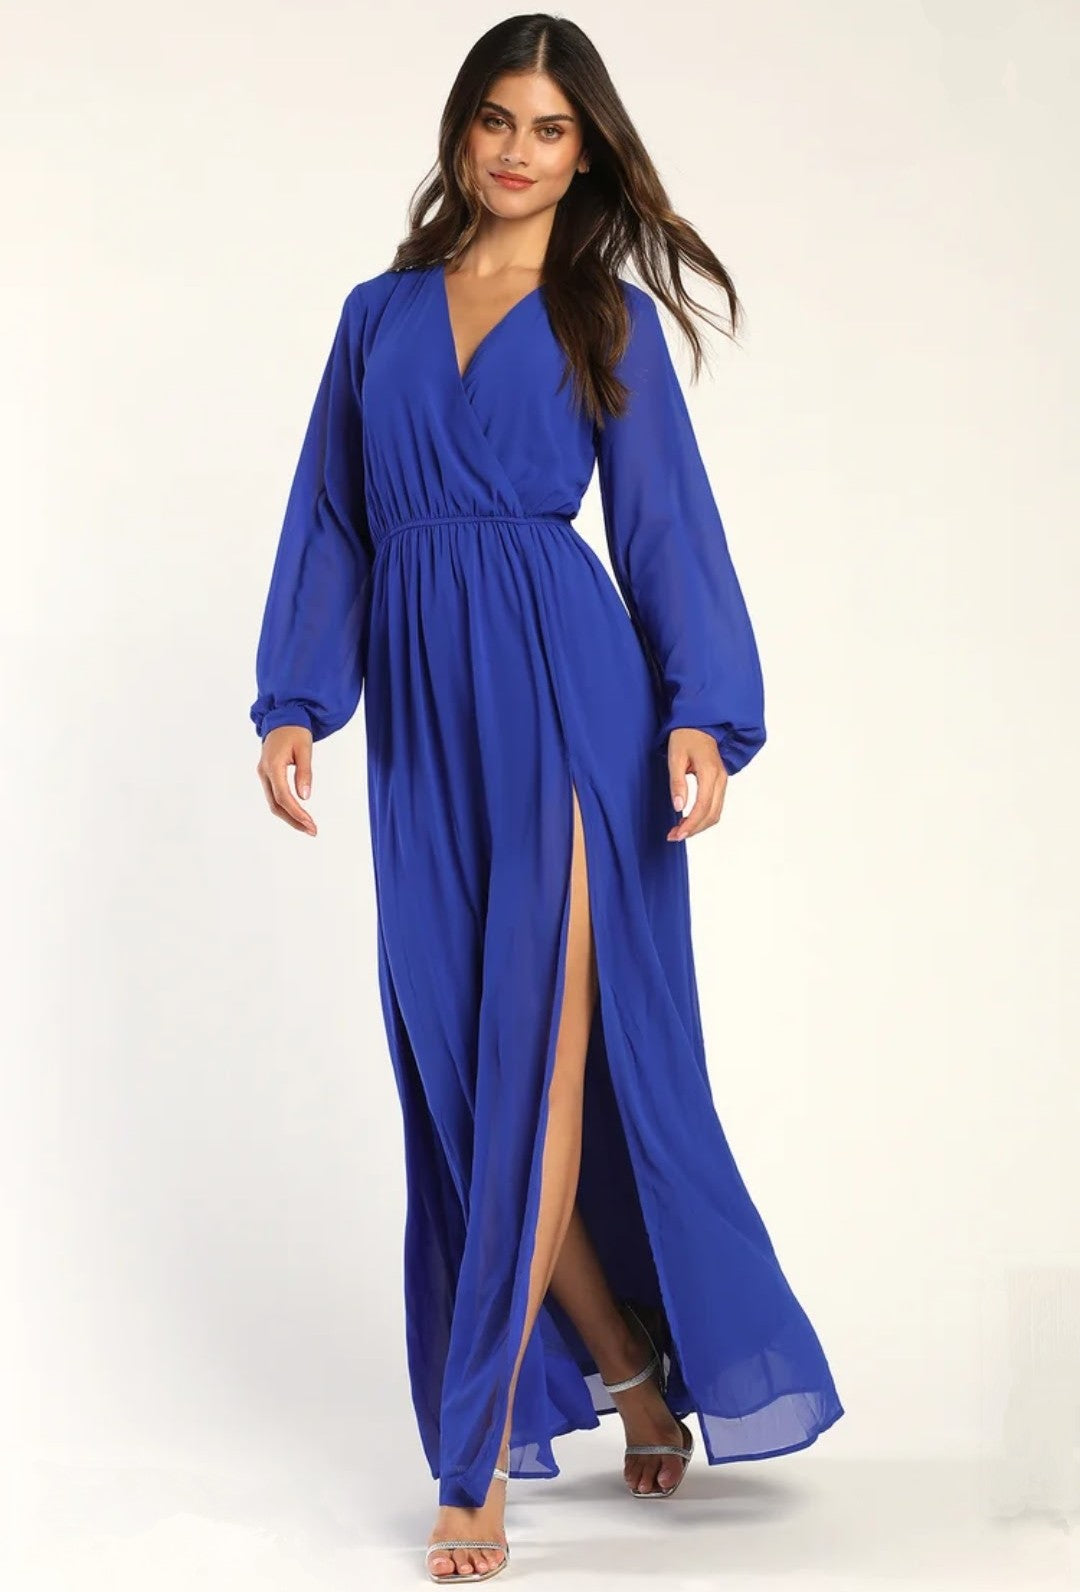 Lulu's Royal Blue Maxi Dress Sz XS